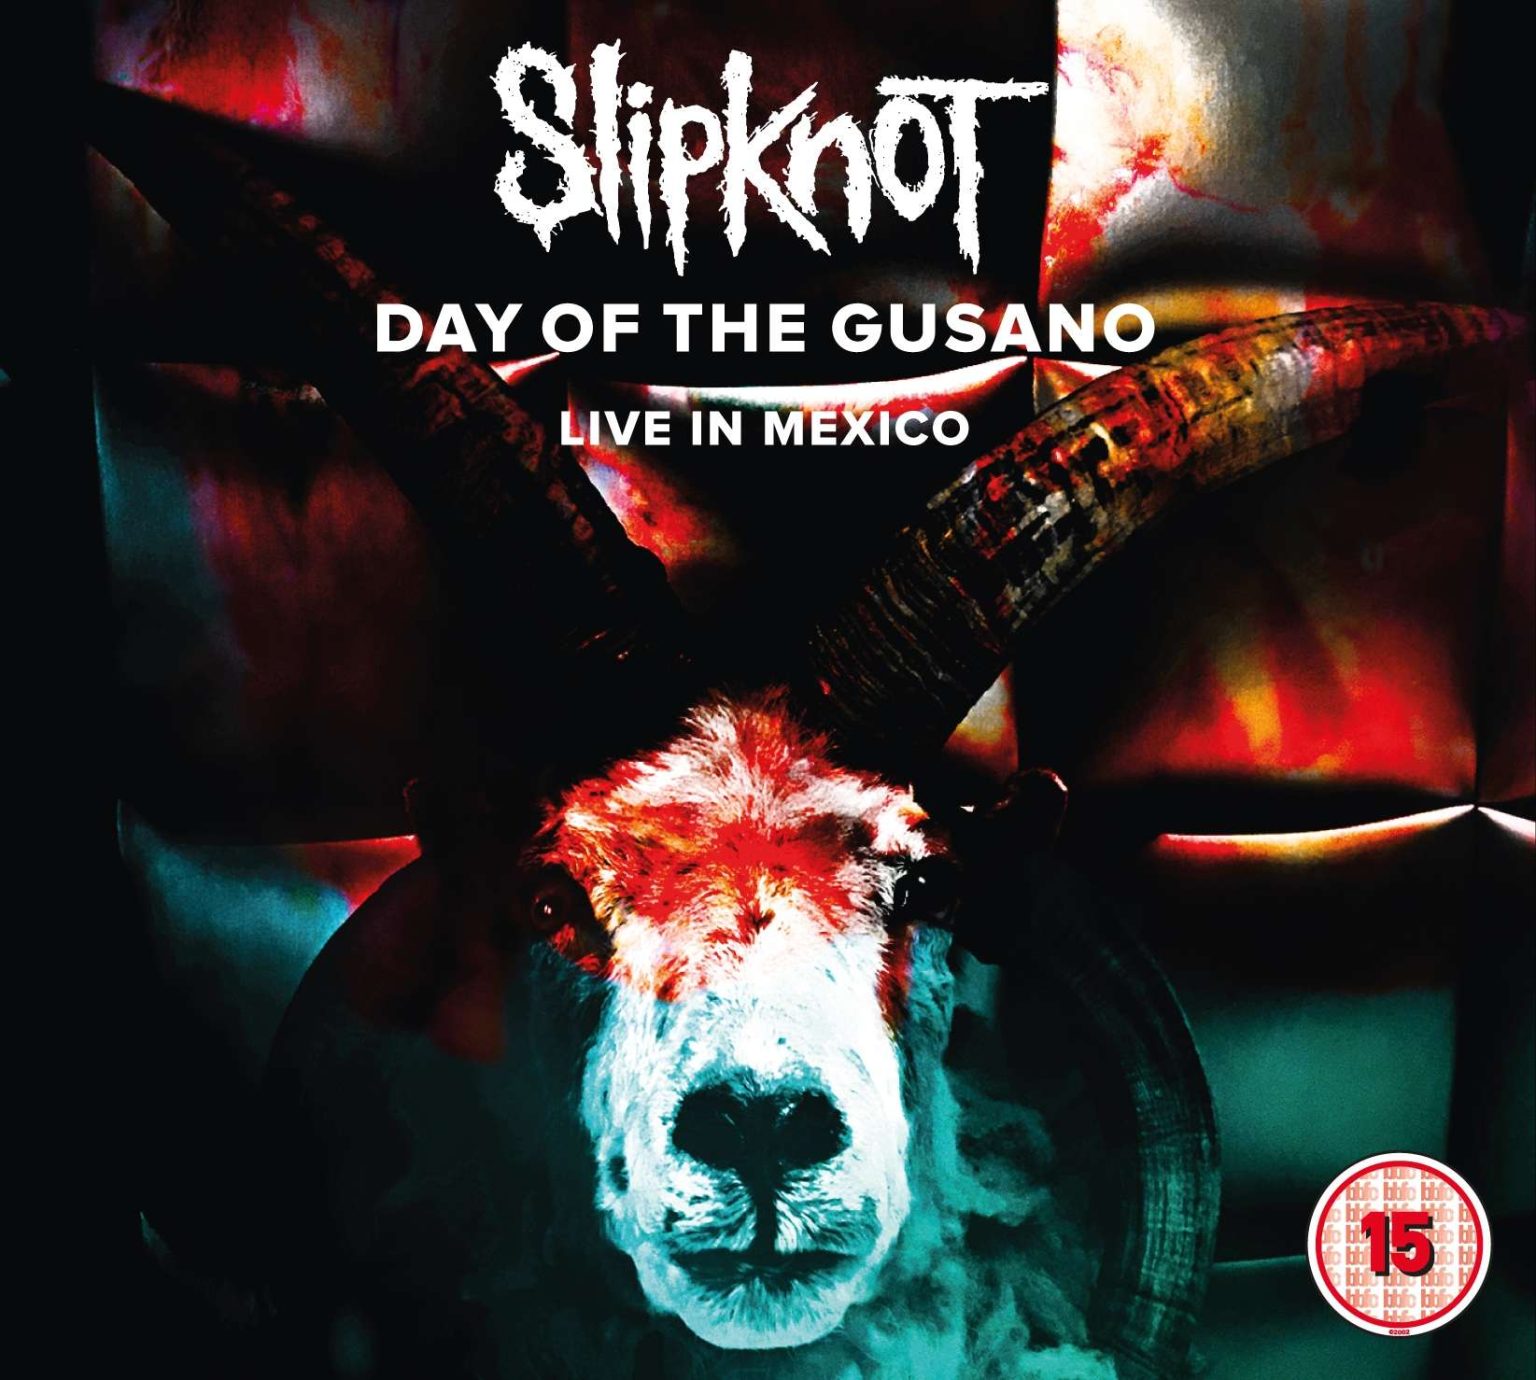 Okładka płyty winylowej artysty Slipknot o tytule Slipknot: Day Of The Gusano Live In Mexico 2015